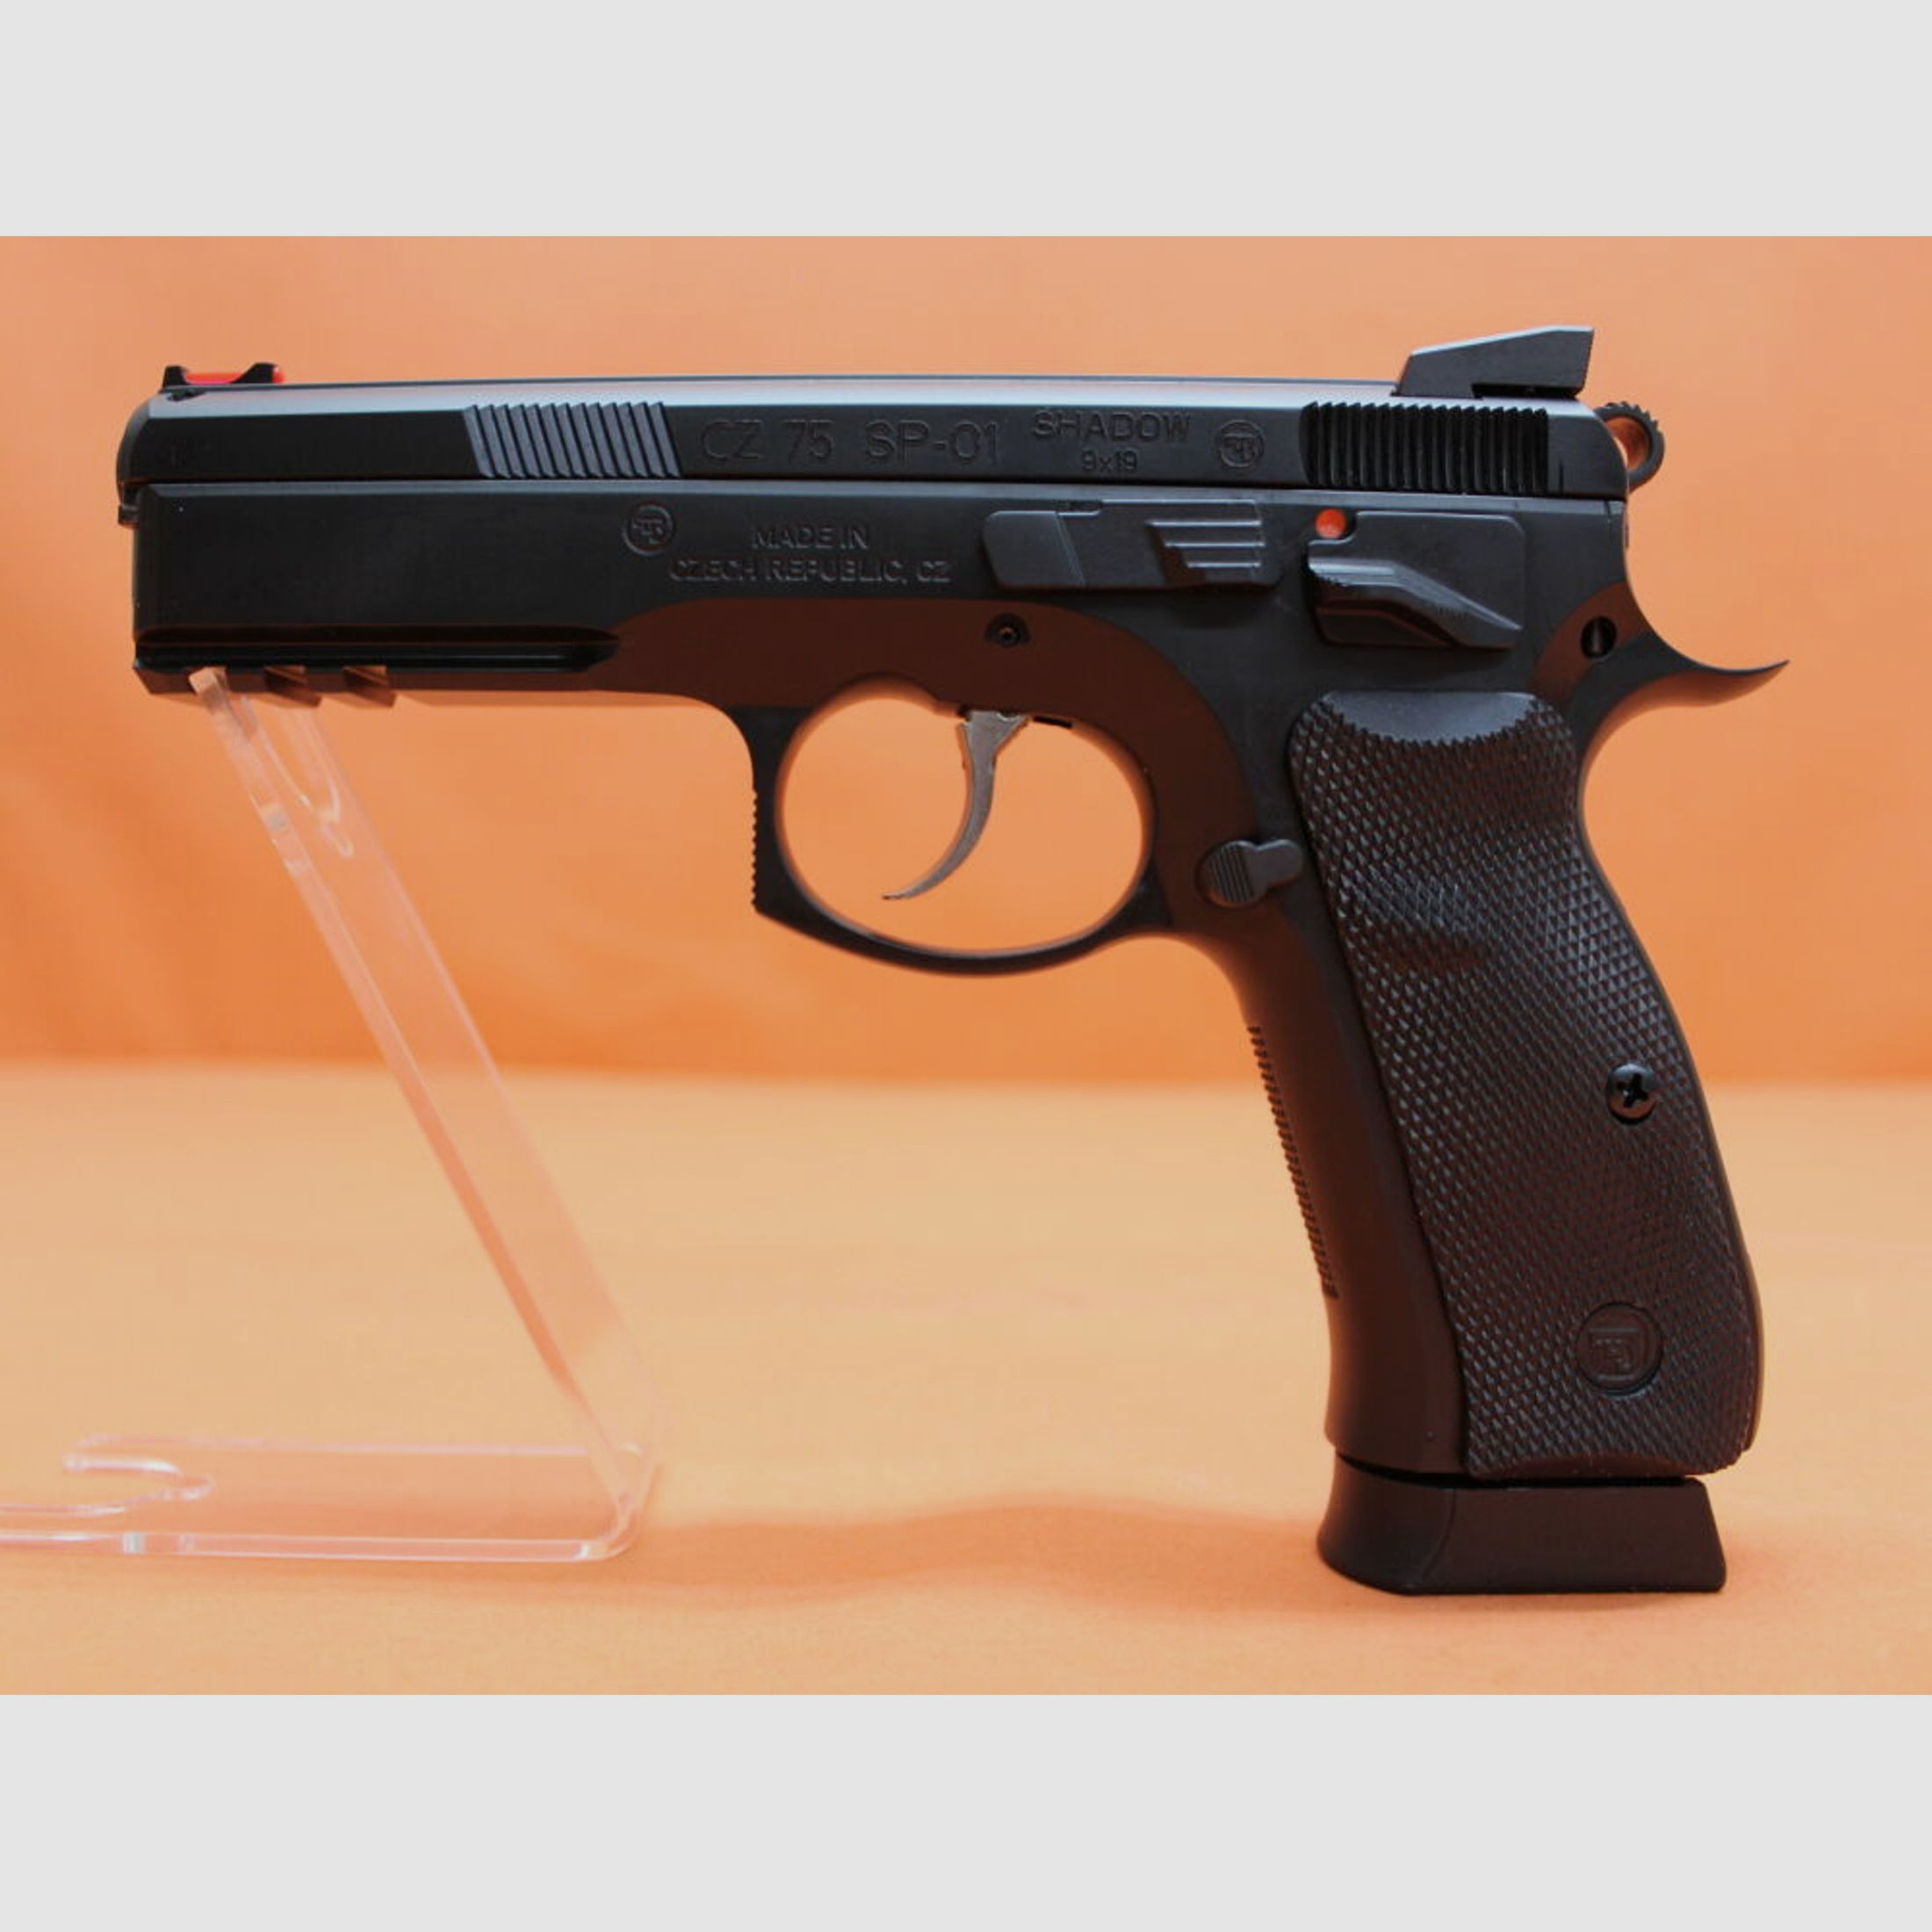 CZUB	 Ha.Pistole 9mmLuger CZUB CZ 75 SP-01 SHADOW 116mm Lauf/Fiber-Leuchtkorn/3 Magazine (9mmPara/9x19)